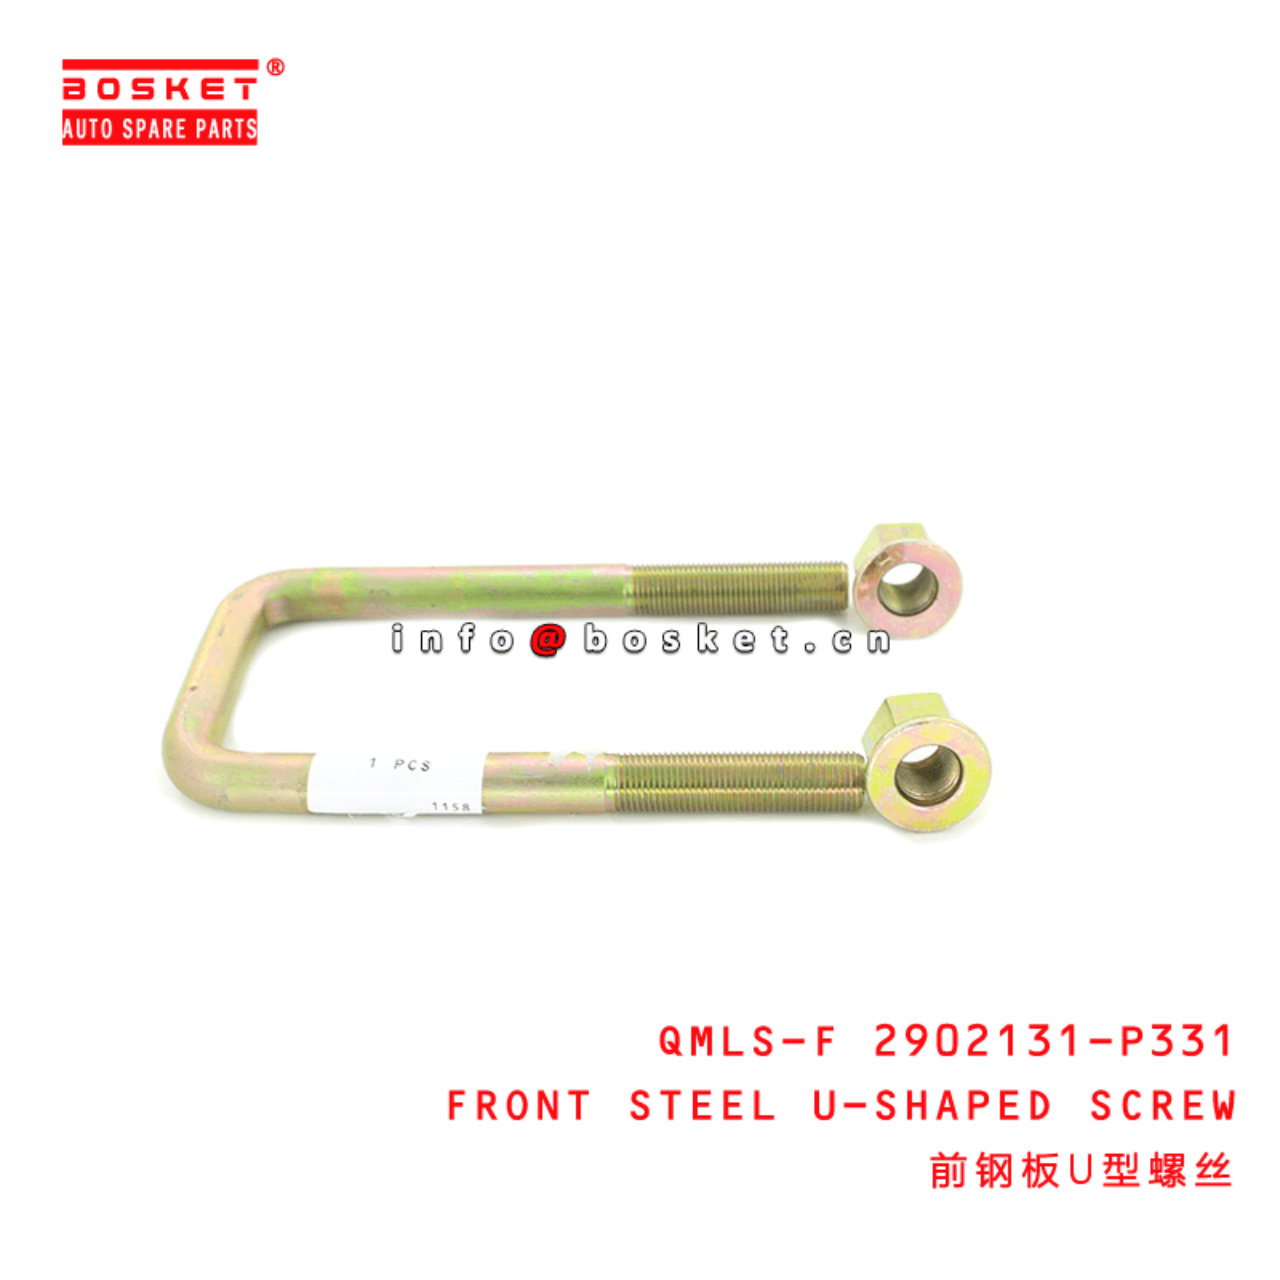 QMLS-F 2902131-P331 Front Steel U-Shaped Screw QMLSF 2902131P331 Suitable for ISUZU 700P